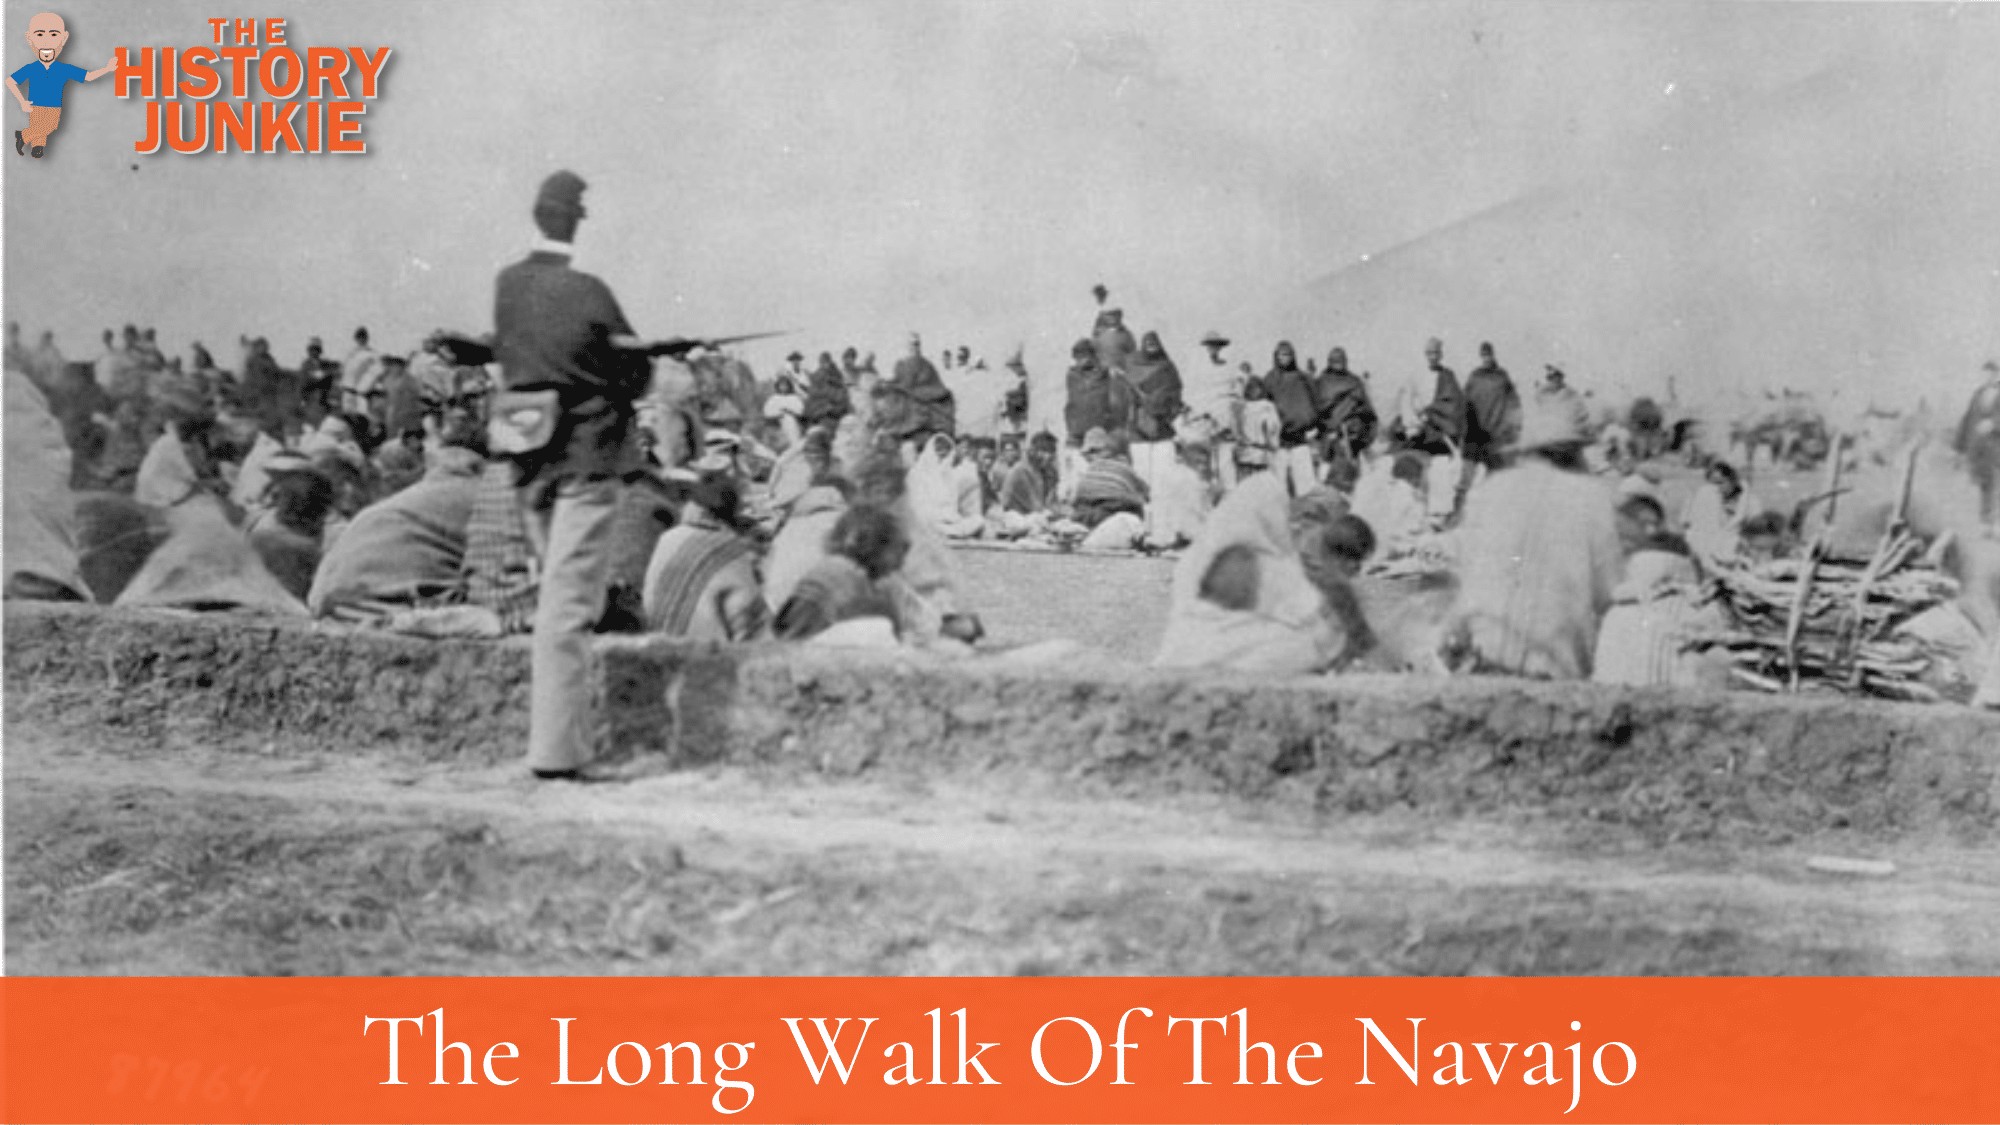 The Long Walk of The Navajo